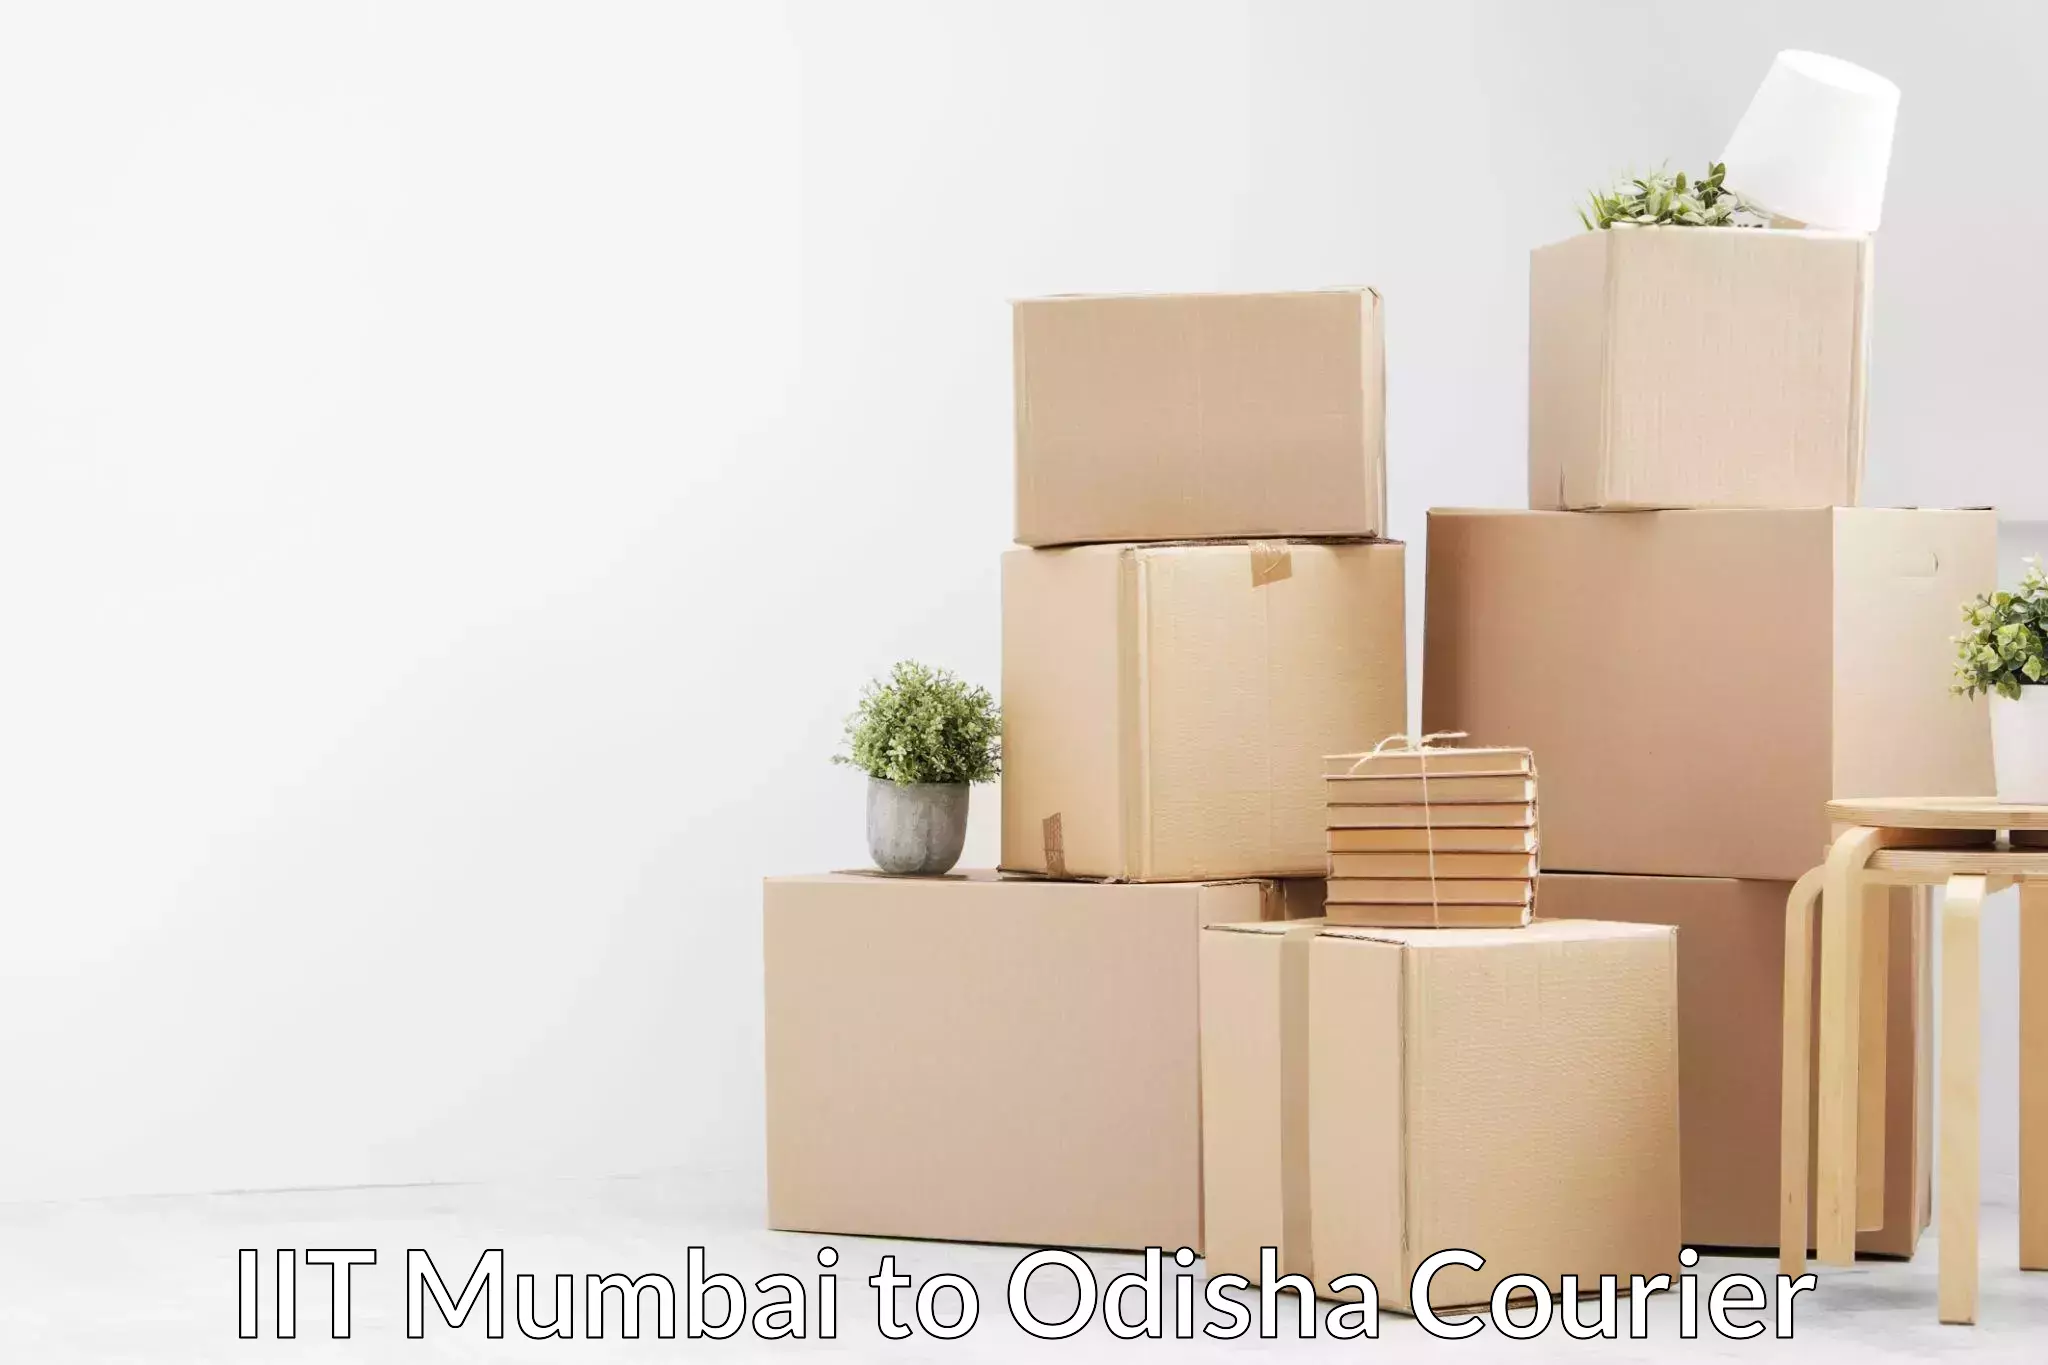 Nationwide household relocation in IIT Mumbai to Ukhunda